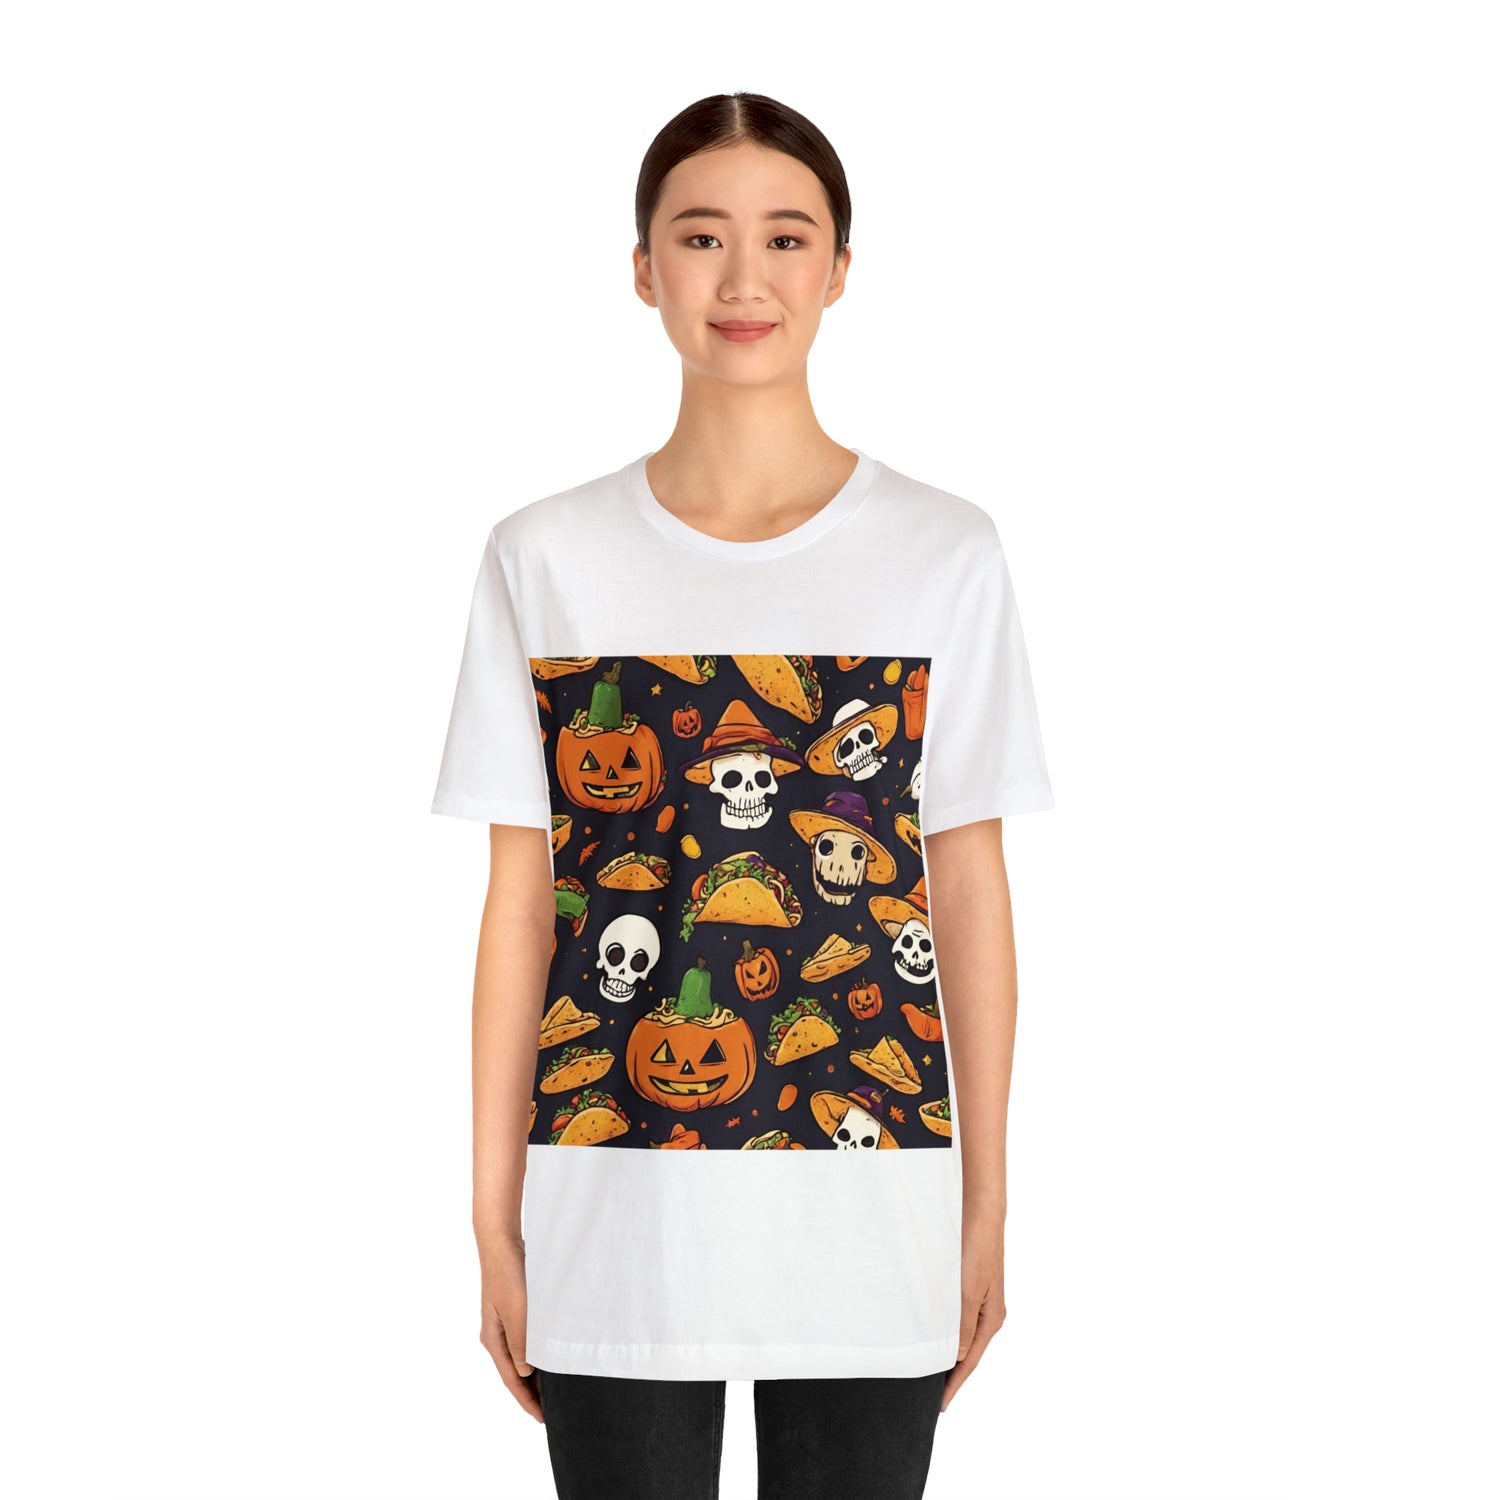 T-Shirt Tshirt Design Halloween Gift for Friend and Family Short Sleeved Shirt Petrova Designs